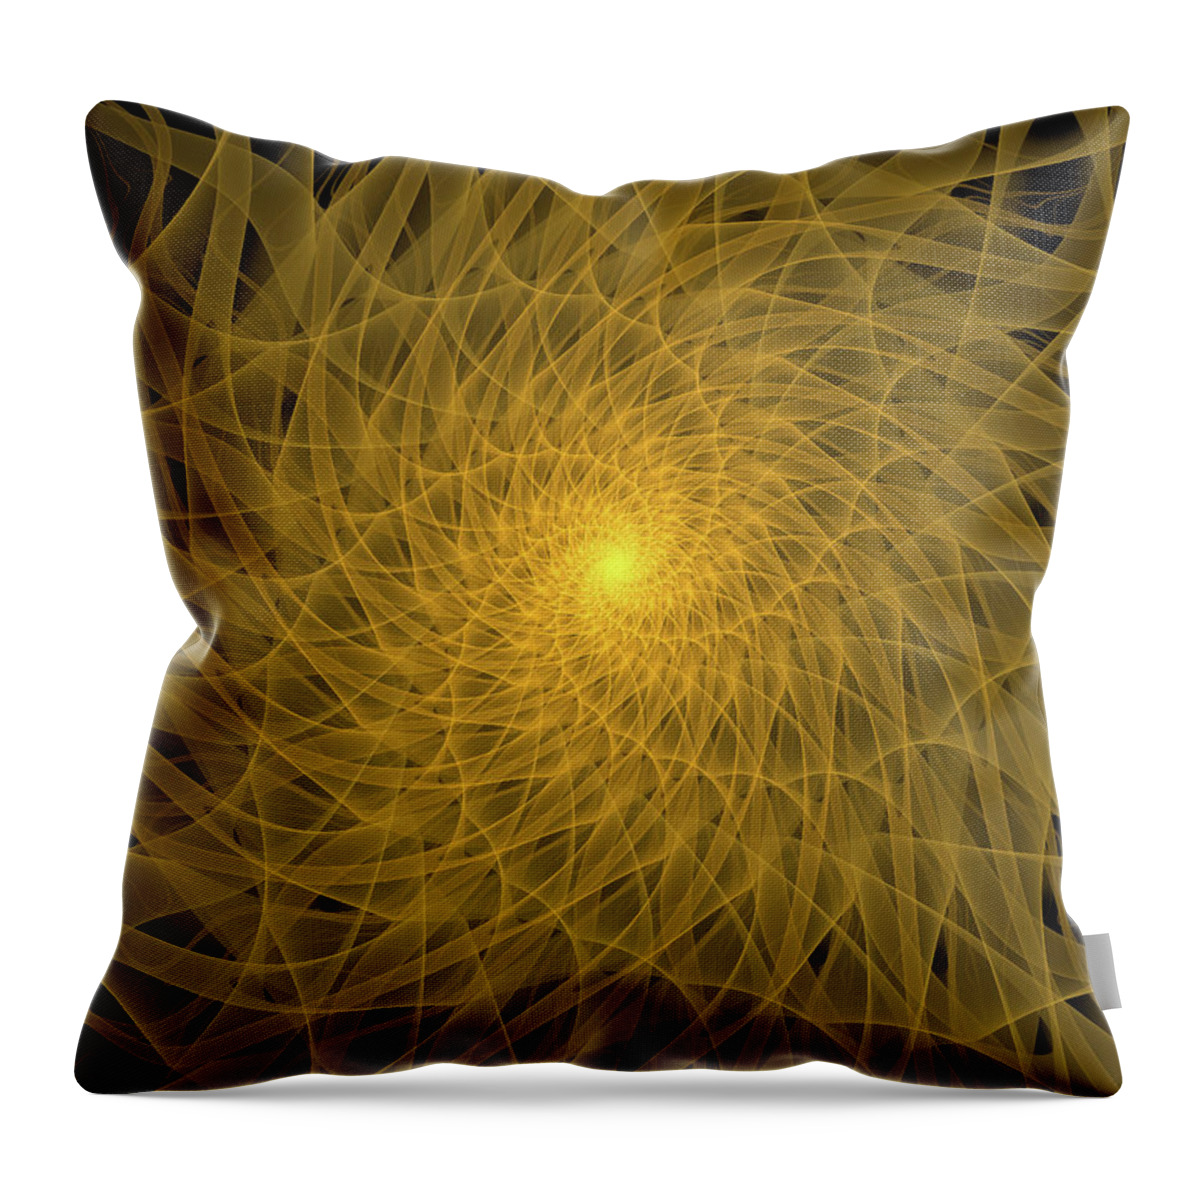 Black Throw Pillow featuring the digital art Yellow Spiral by Tim Abeln